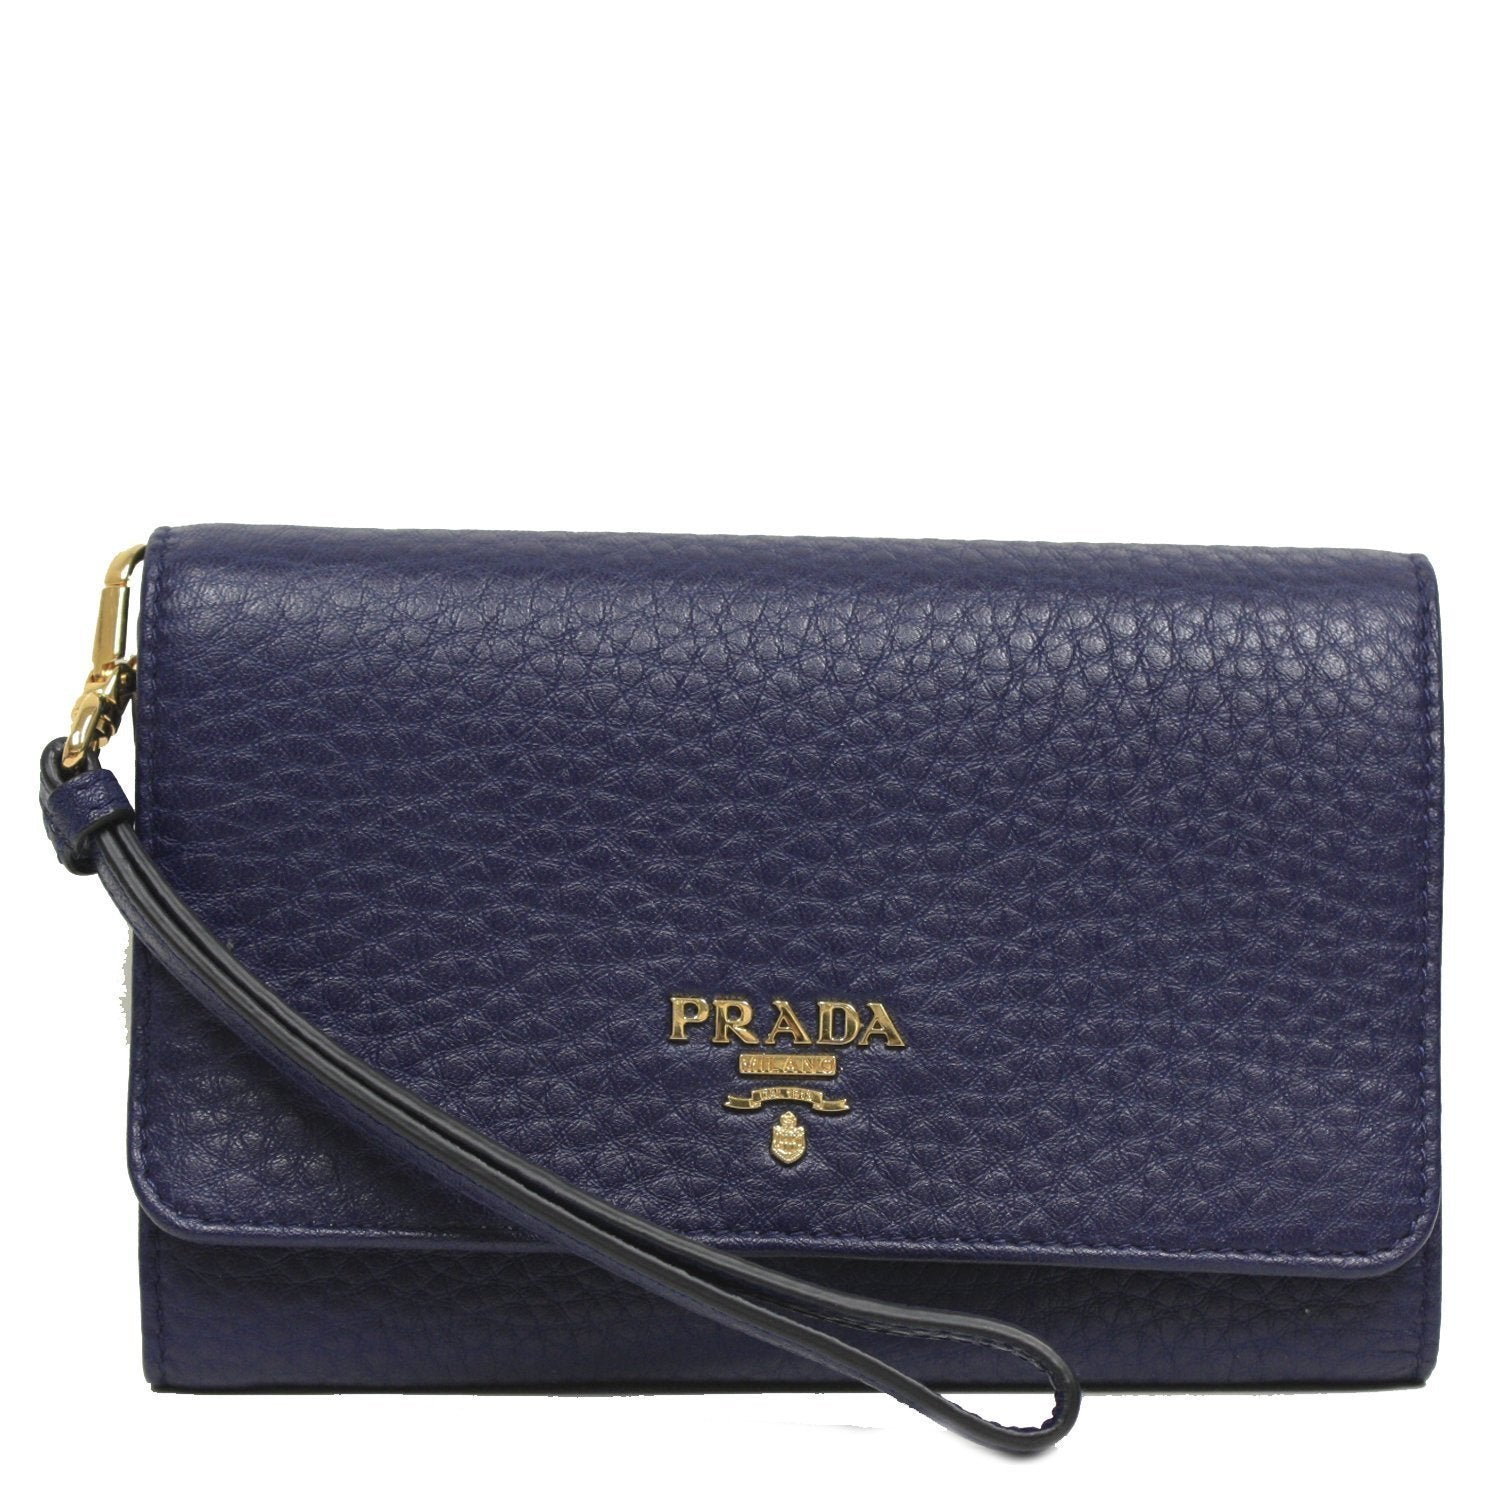 PRADA Portafoglio Vitello Grain Royal Blue Leather Wristlet Wallet Bag 1MH438 at_Queen_Bee_of_Beverly_Hills